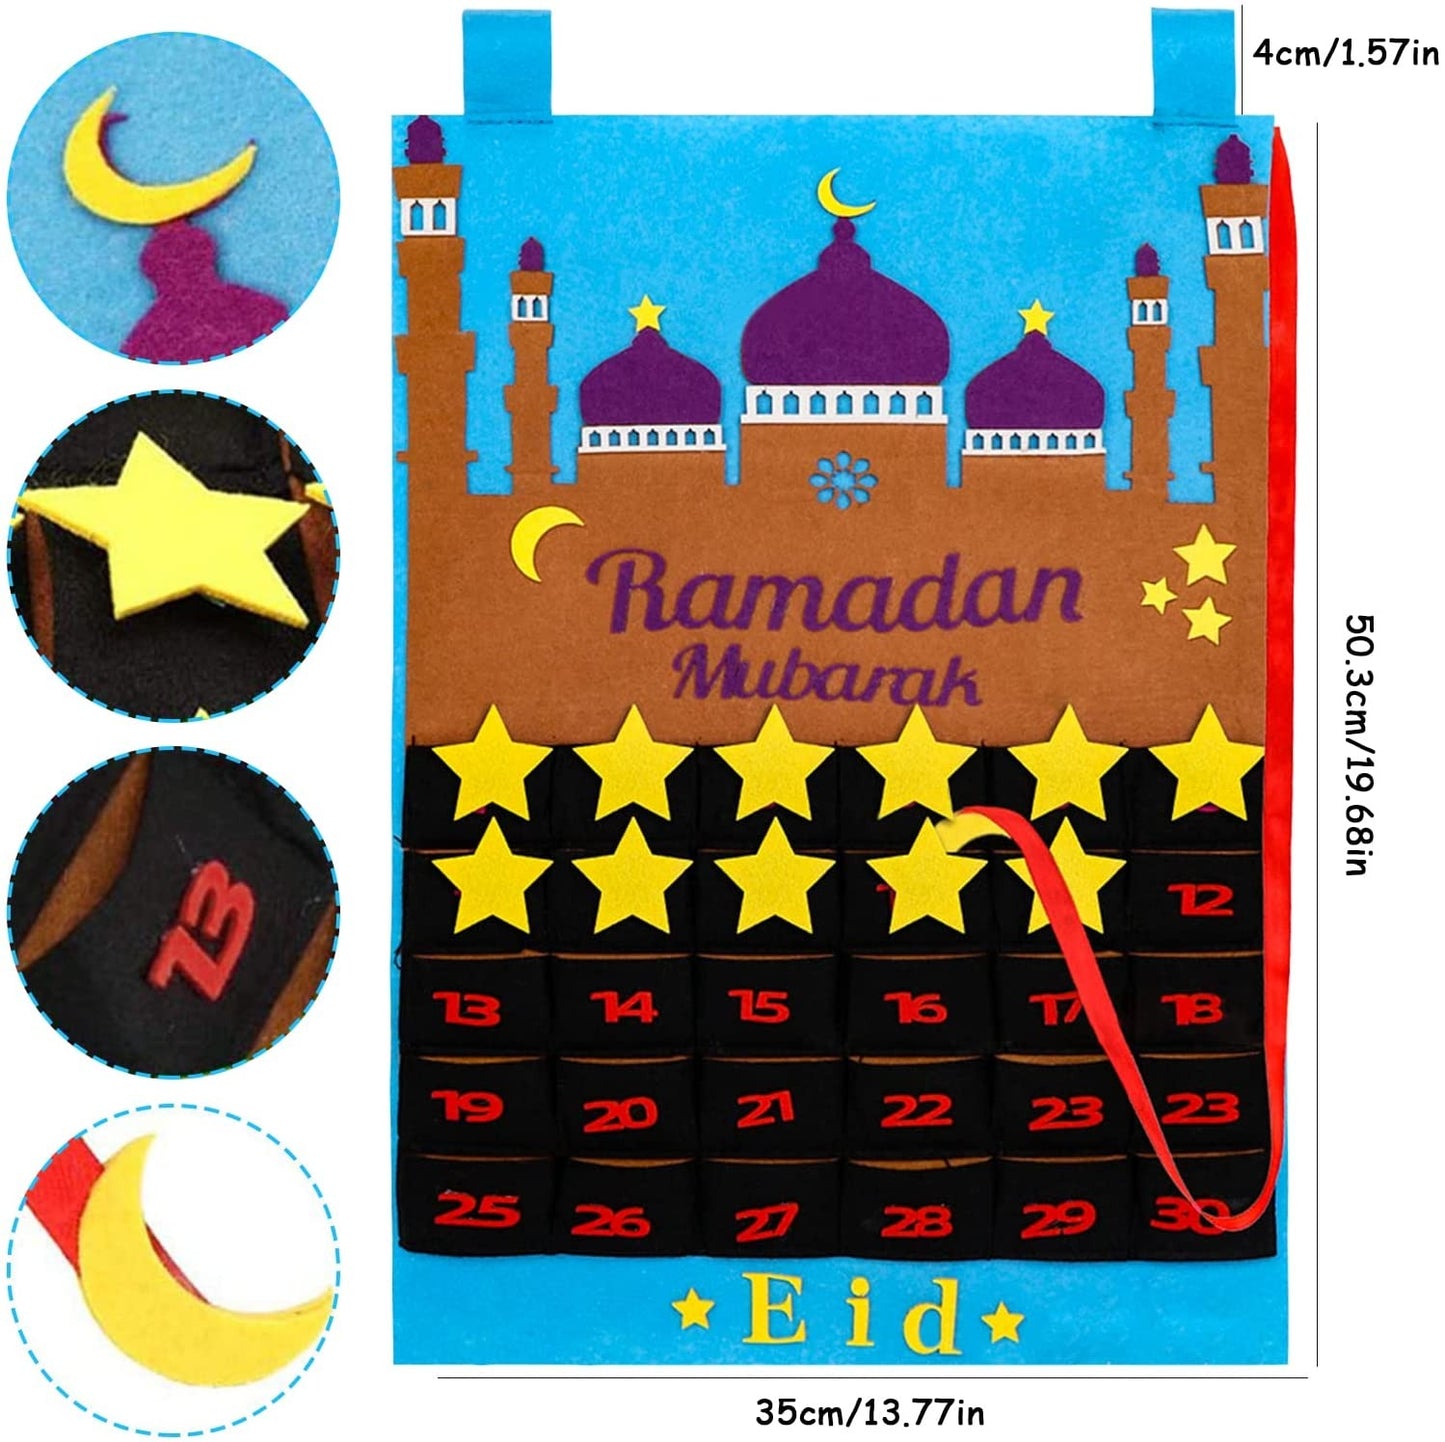 Ramadan Calendar / Ramadan Kalender